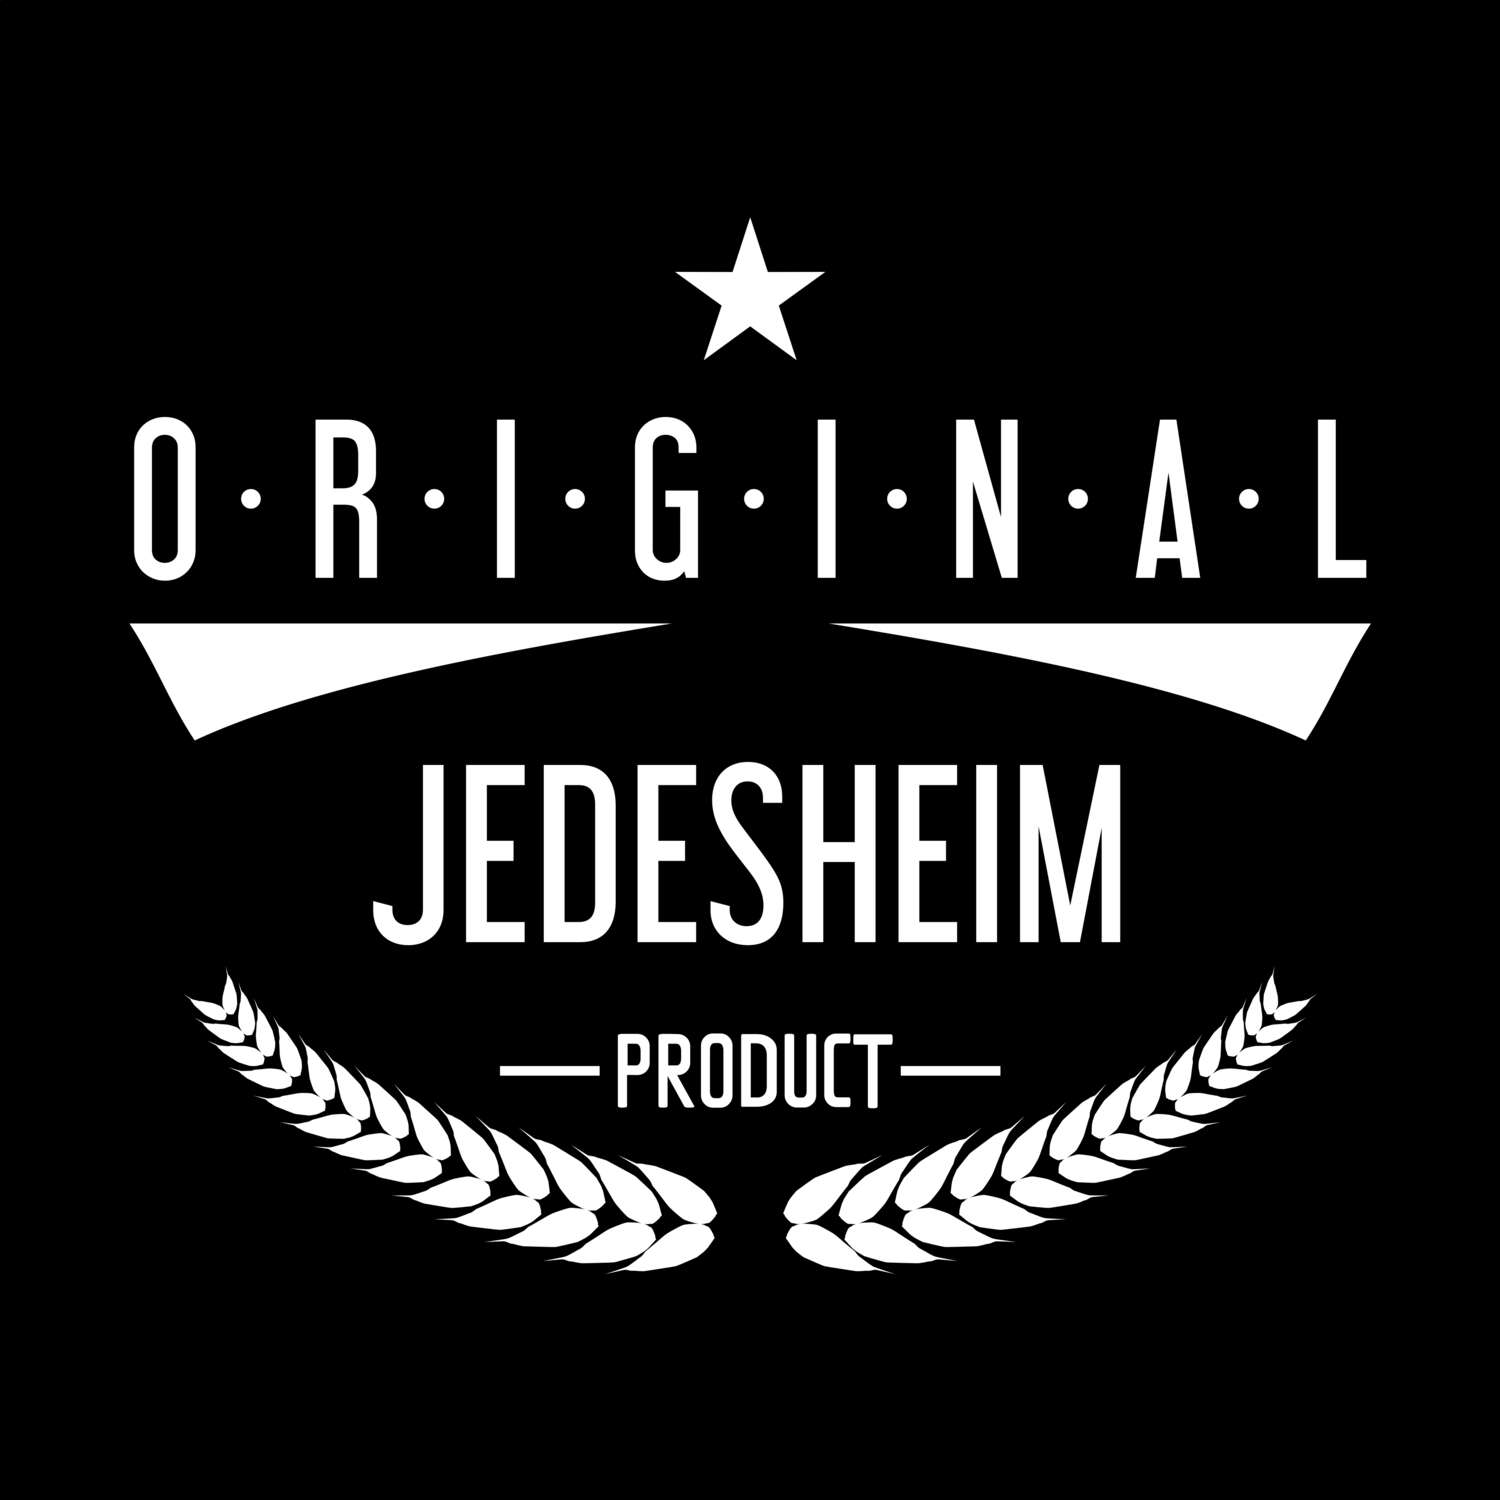 Jedesheim T-Shirt »Original Product«